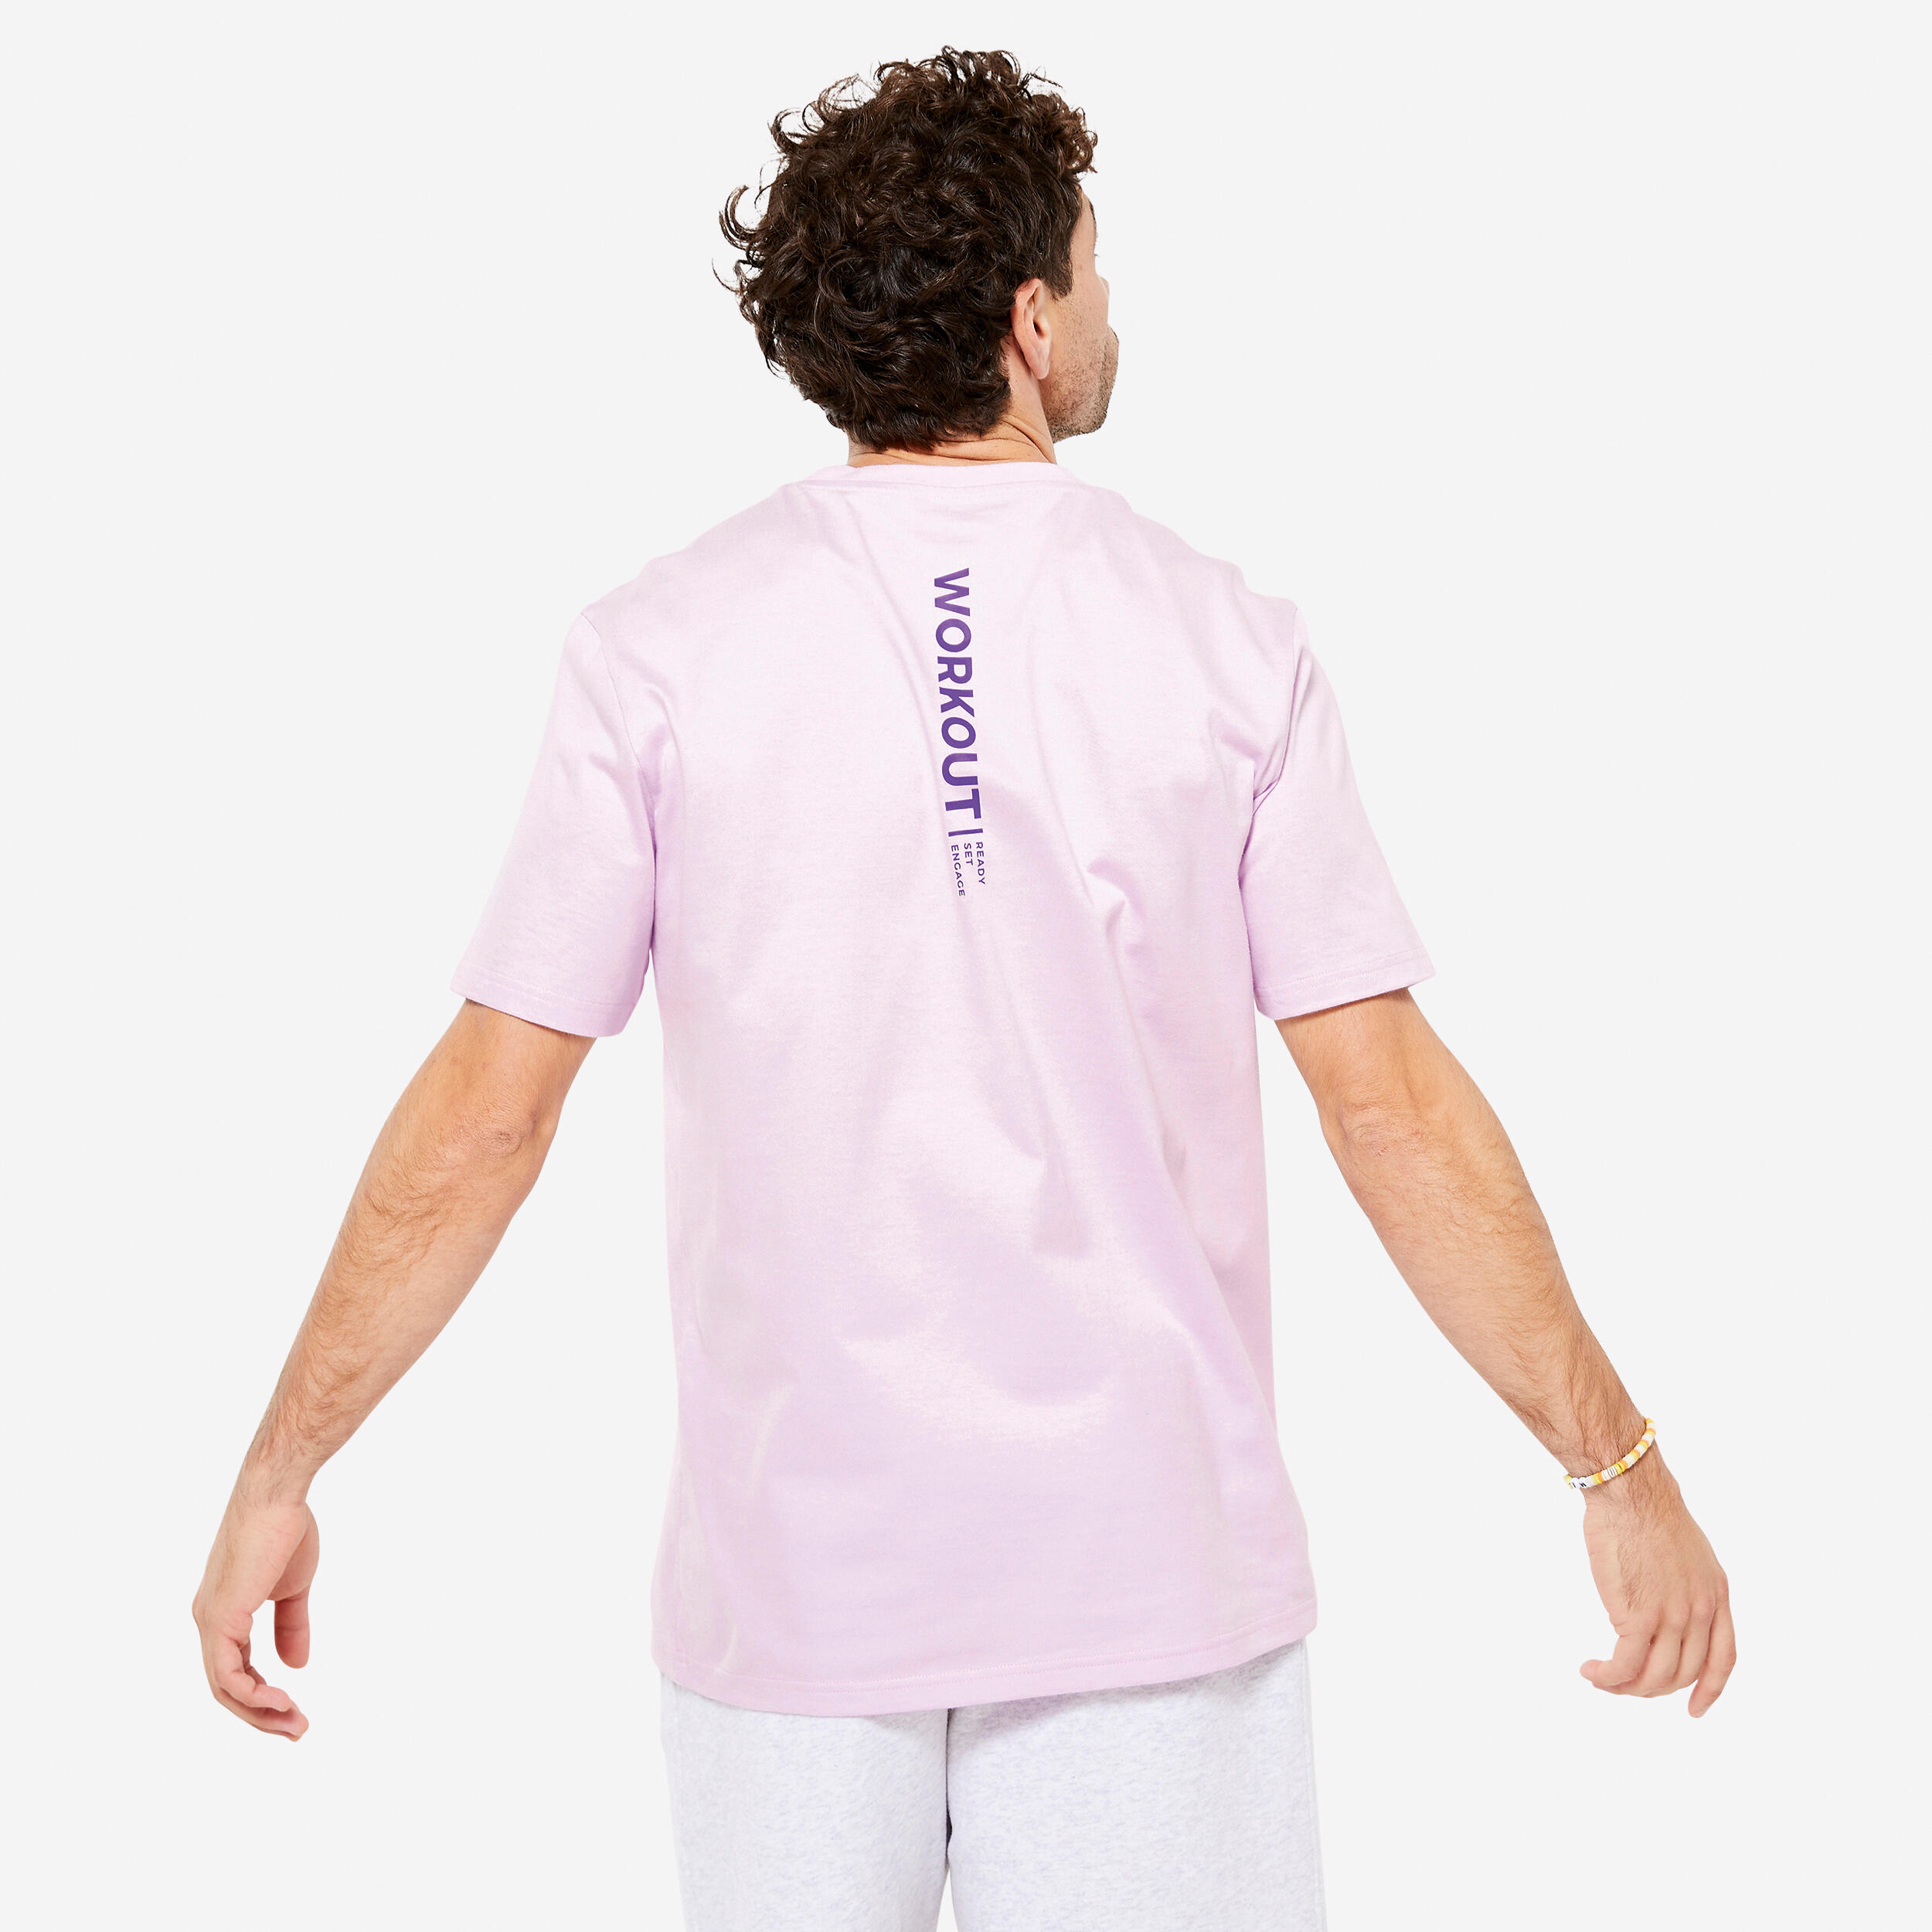 Men's Fitness T-Shirt 500 Essentials - Pastel Mauve Print 5/6